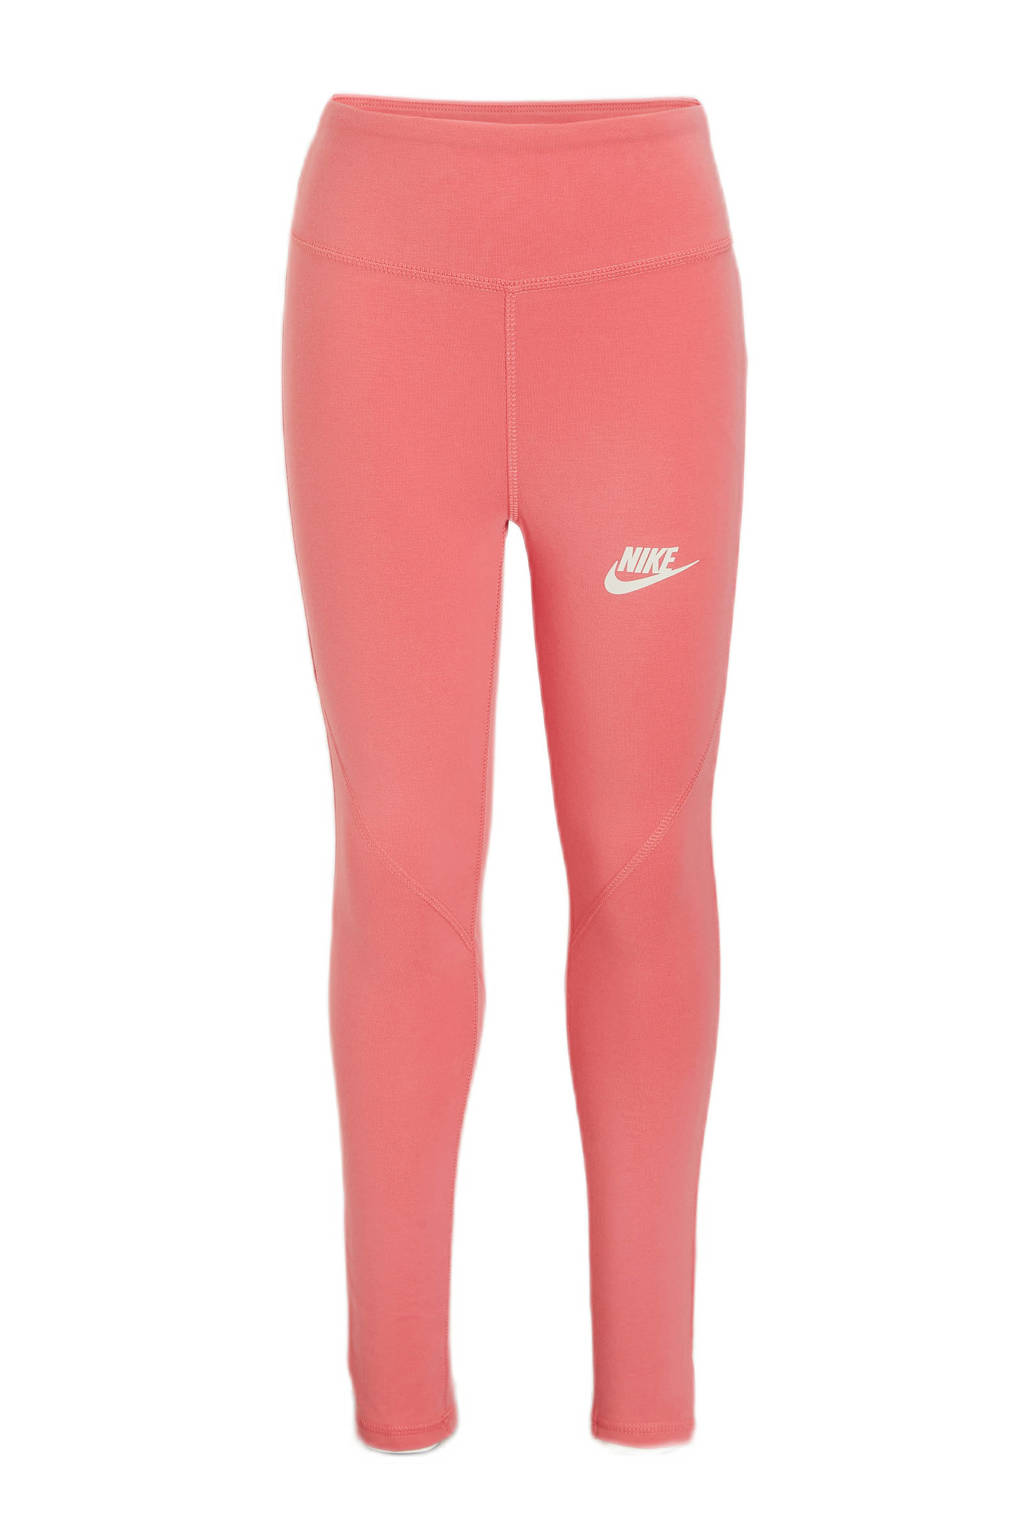 Nike legging roze